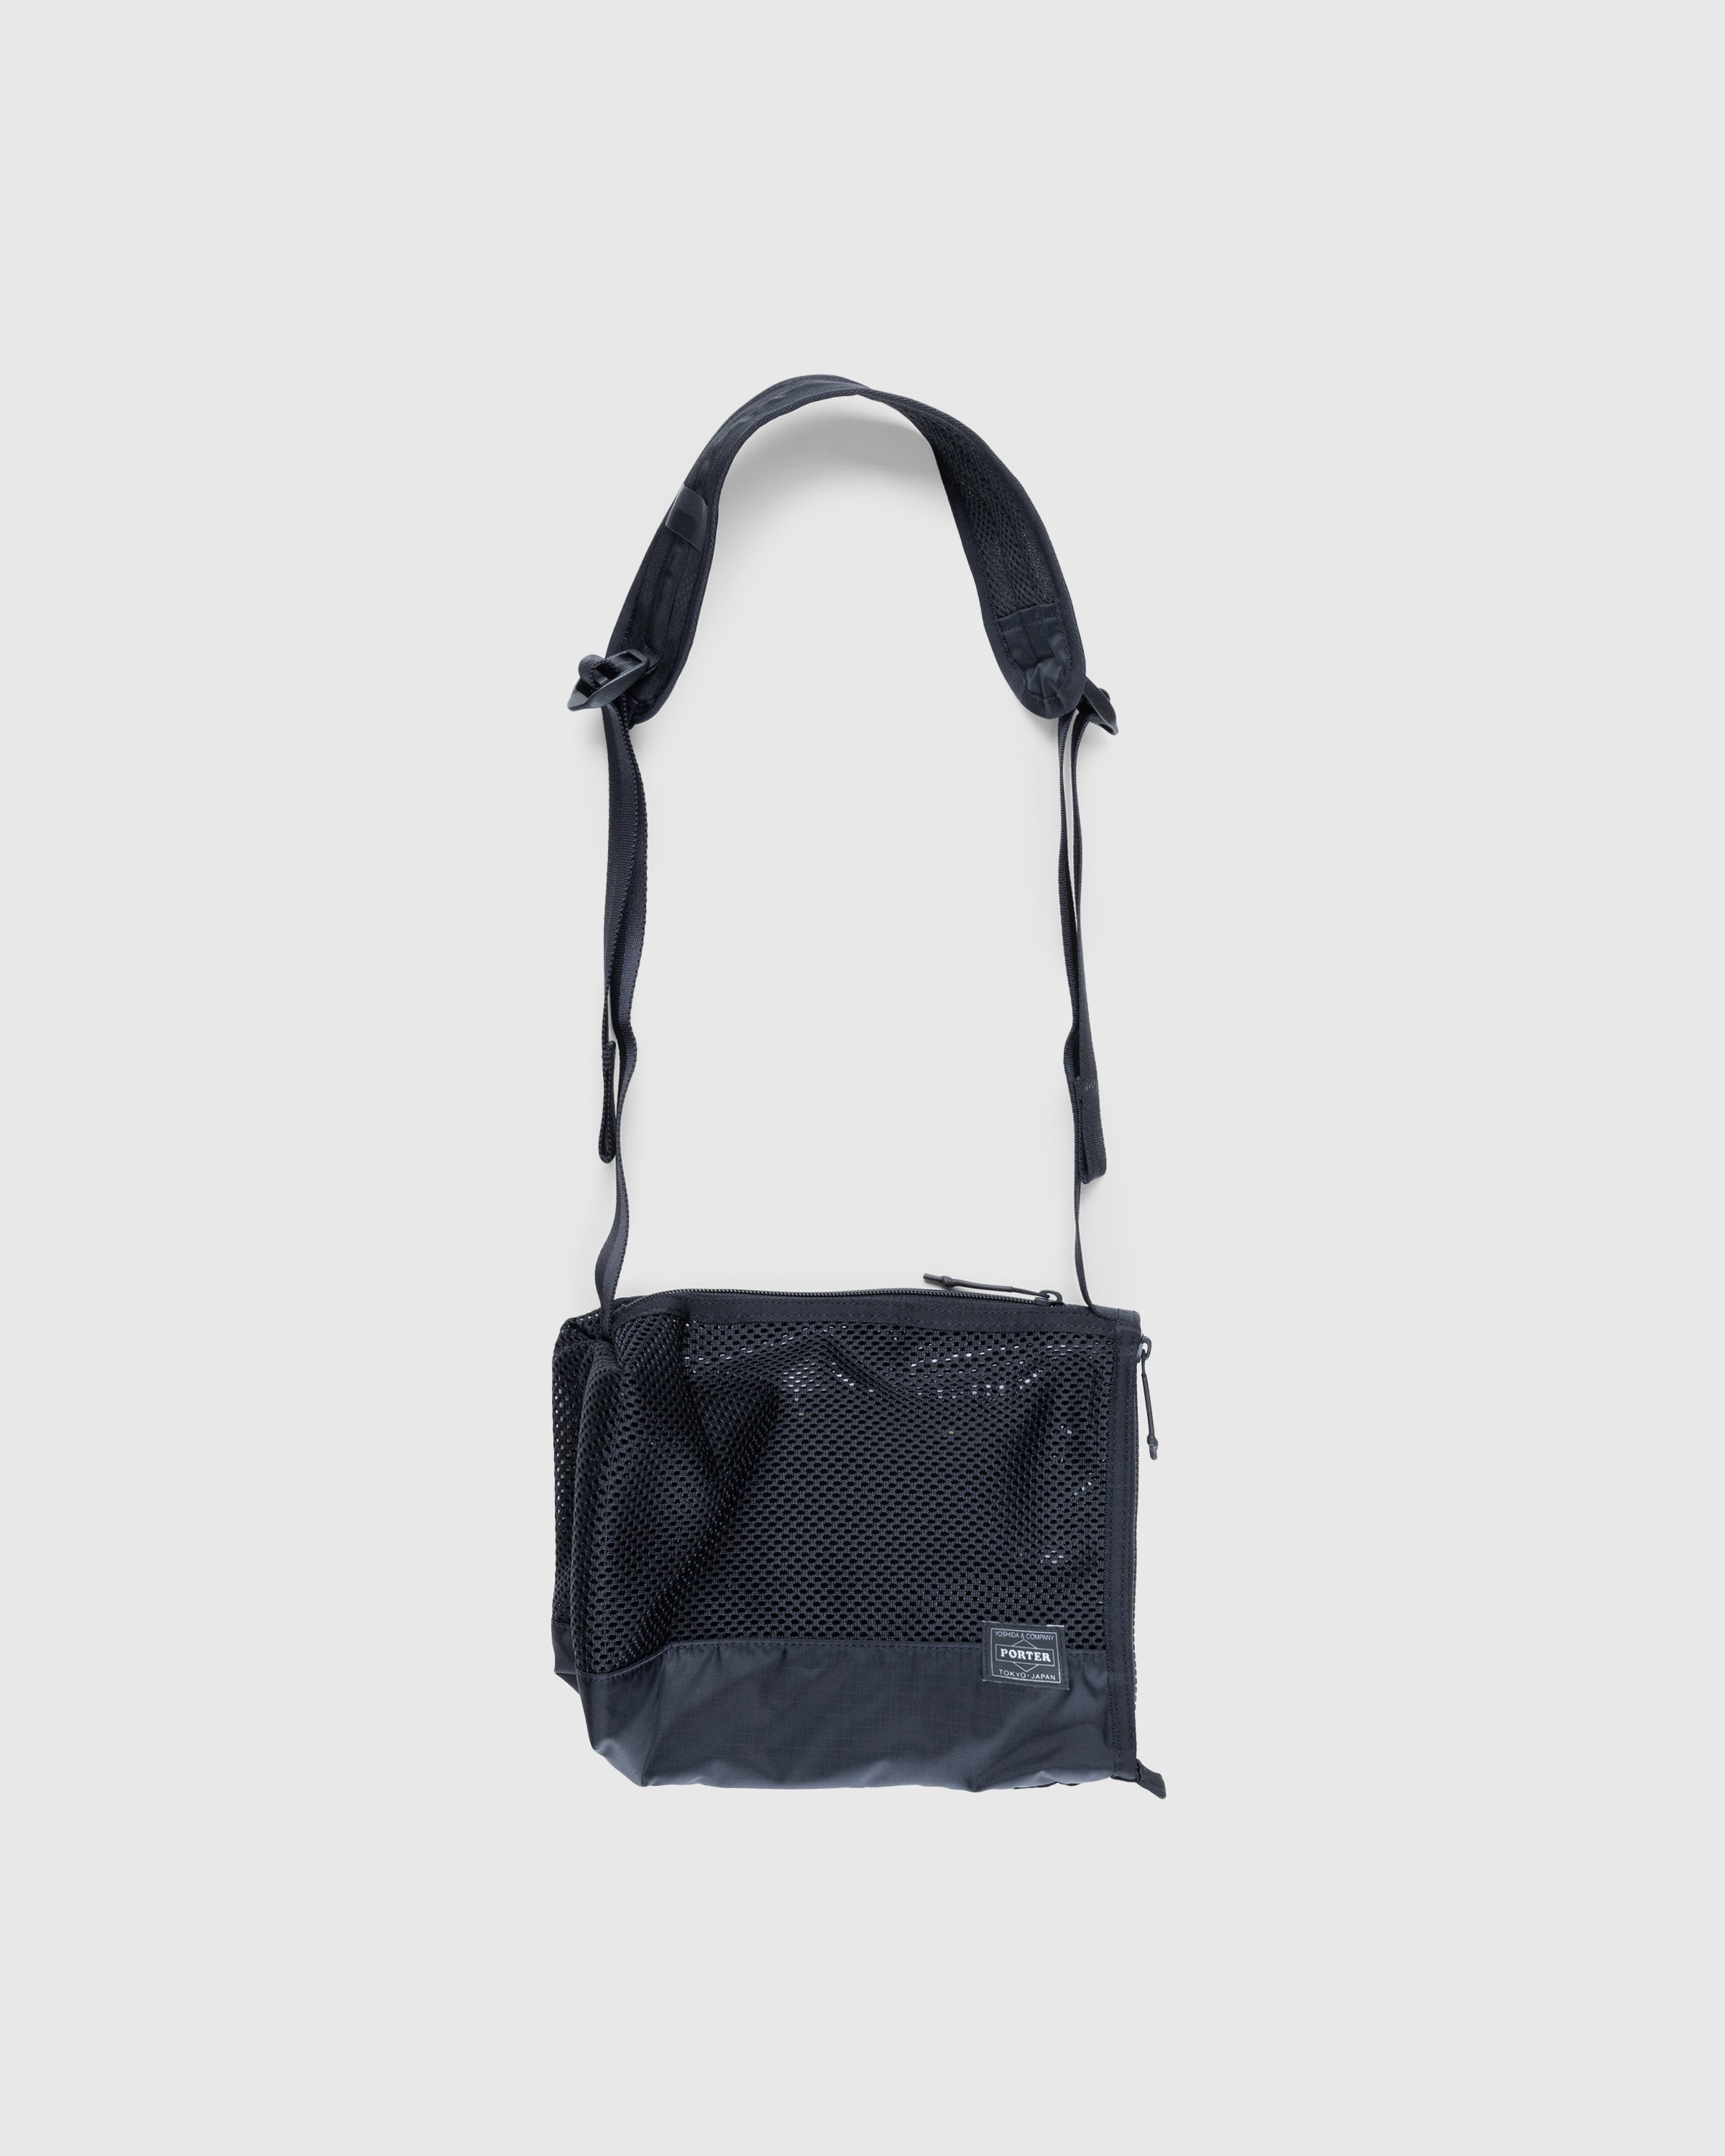 Porter-Yoshida & Co. – Screen Front Side Bag Black | Highsnobiety 